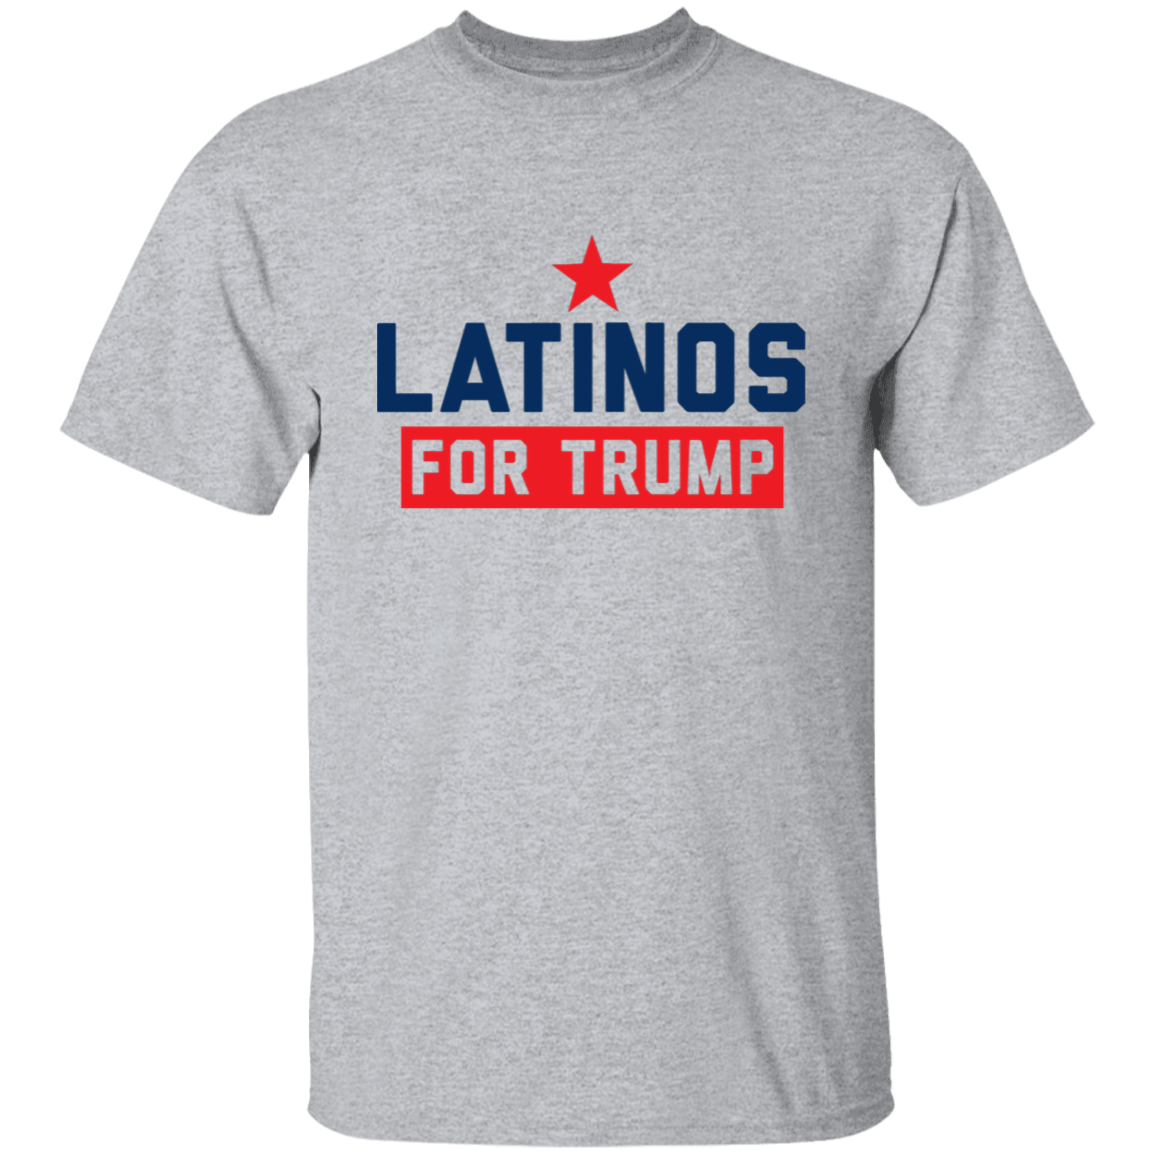 Latino's for Trump